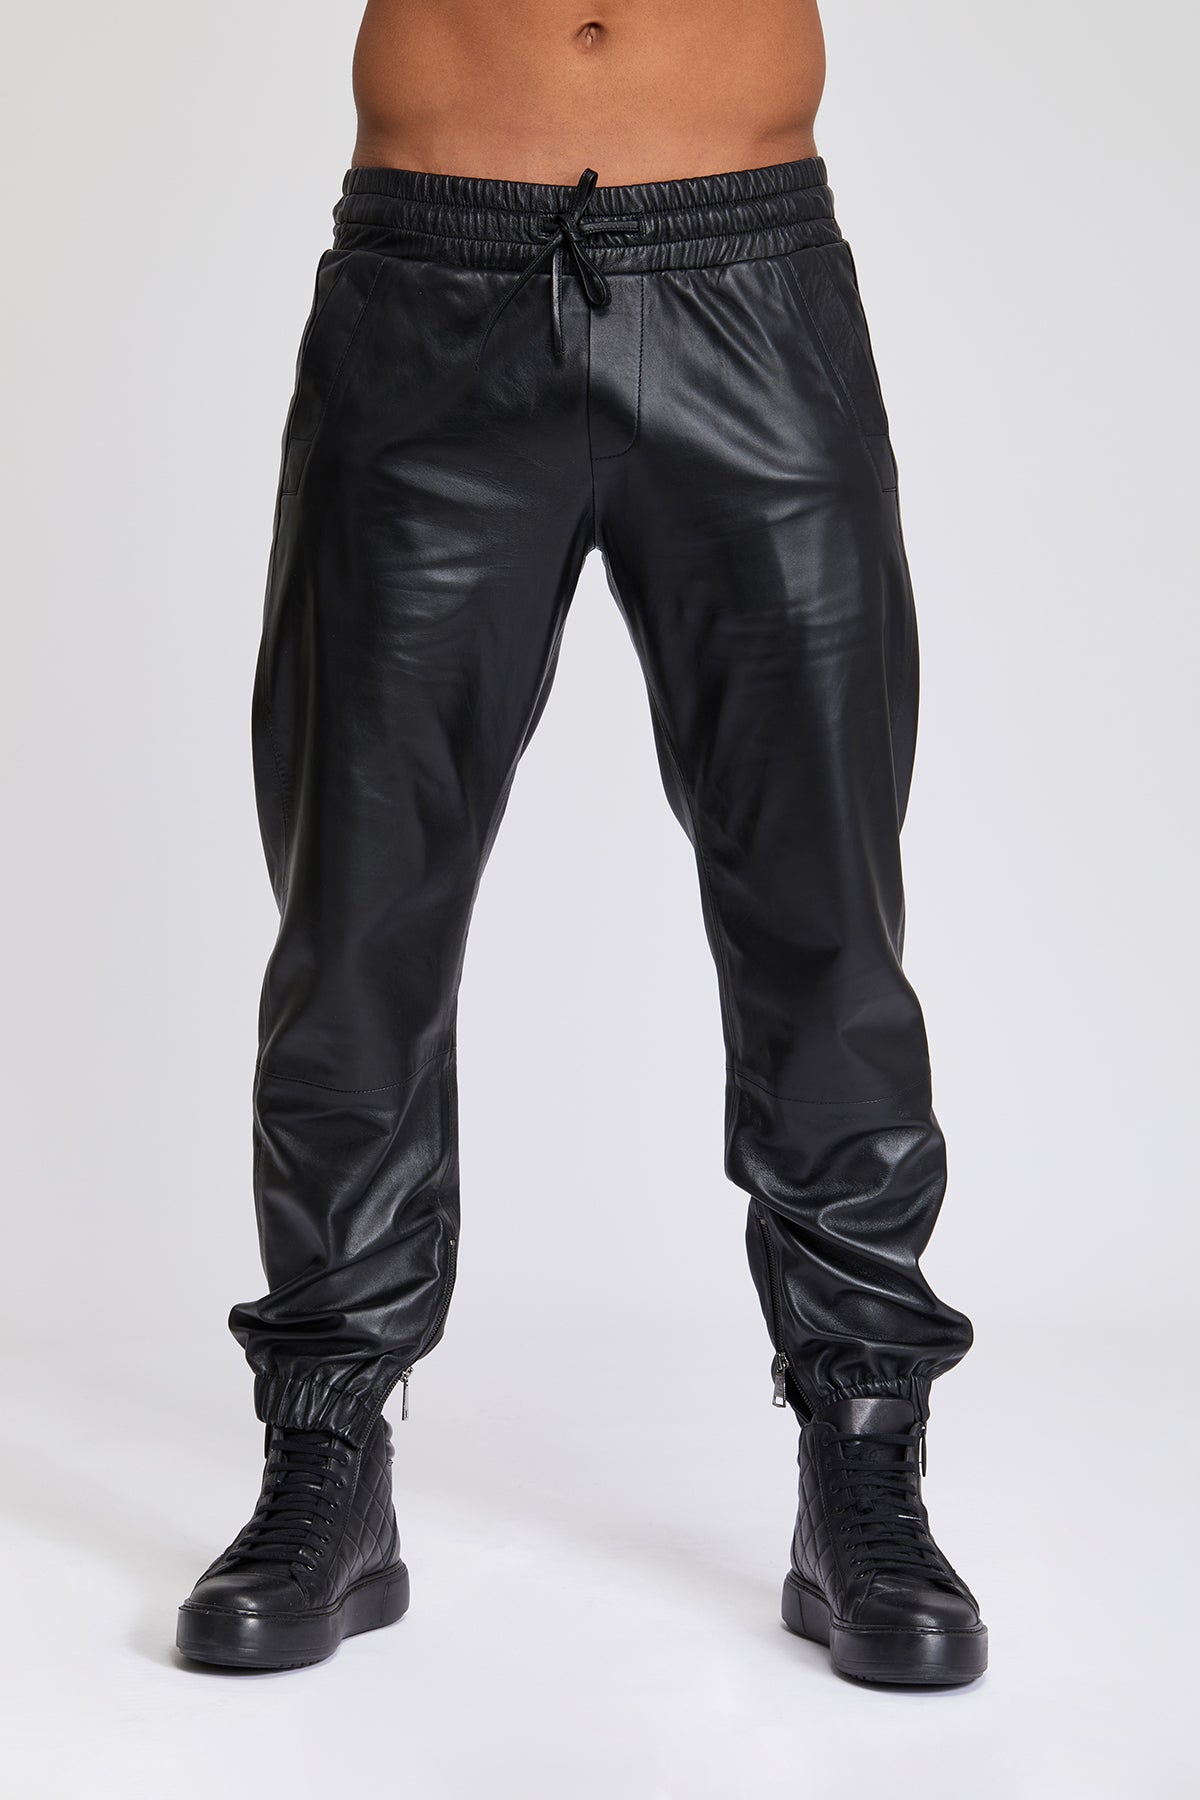 Black leather pants men – SokolArmory